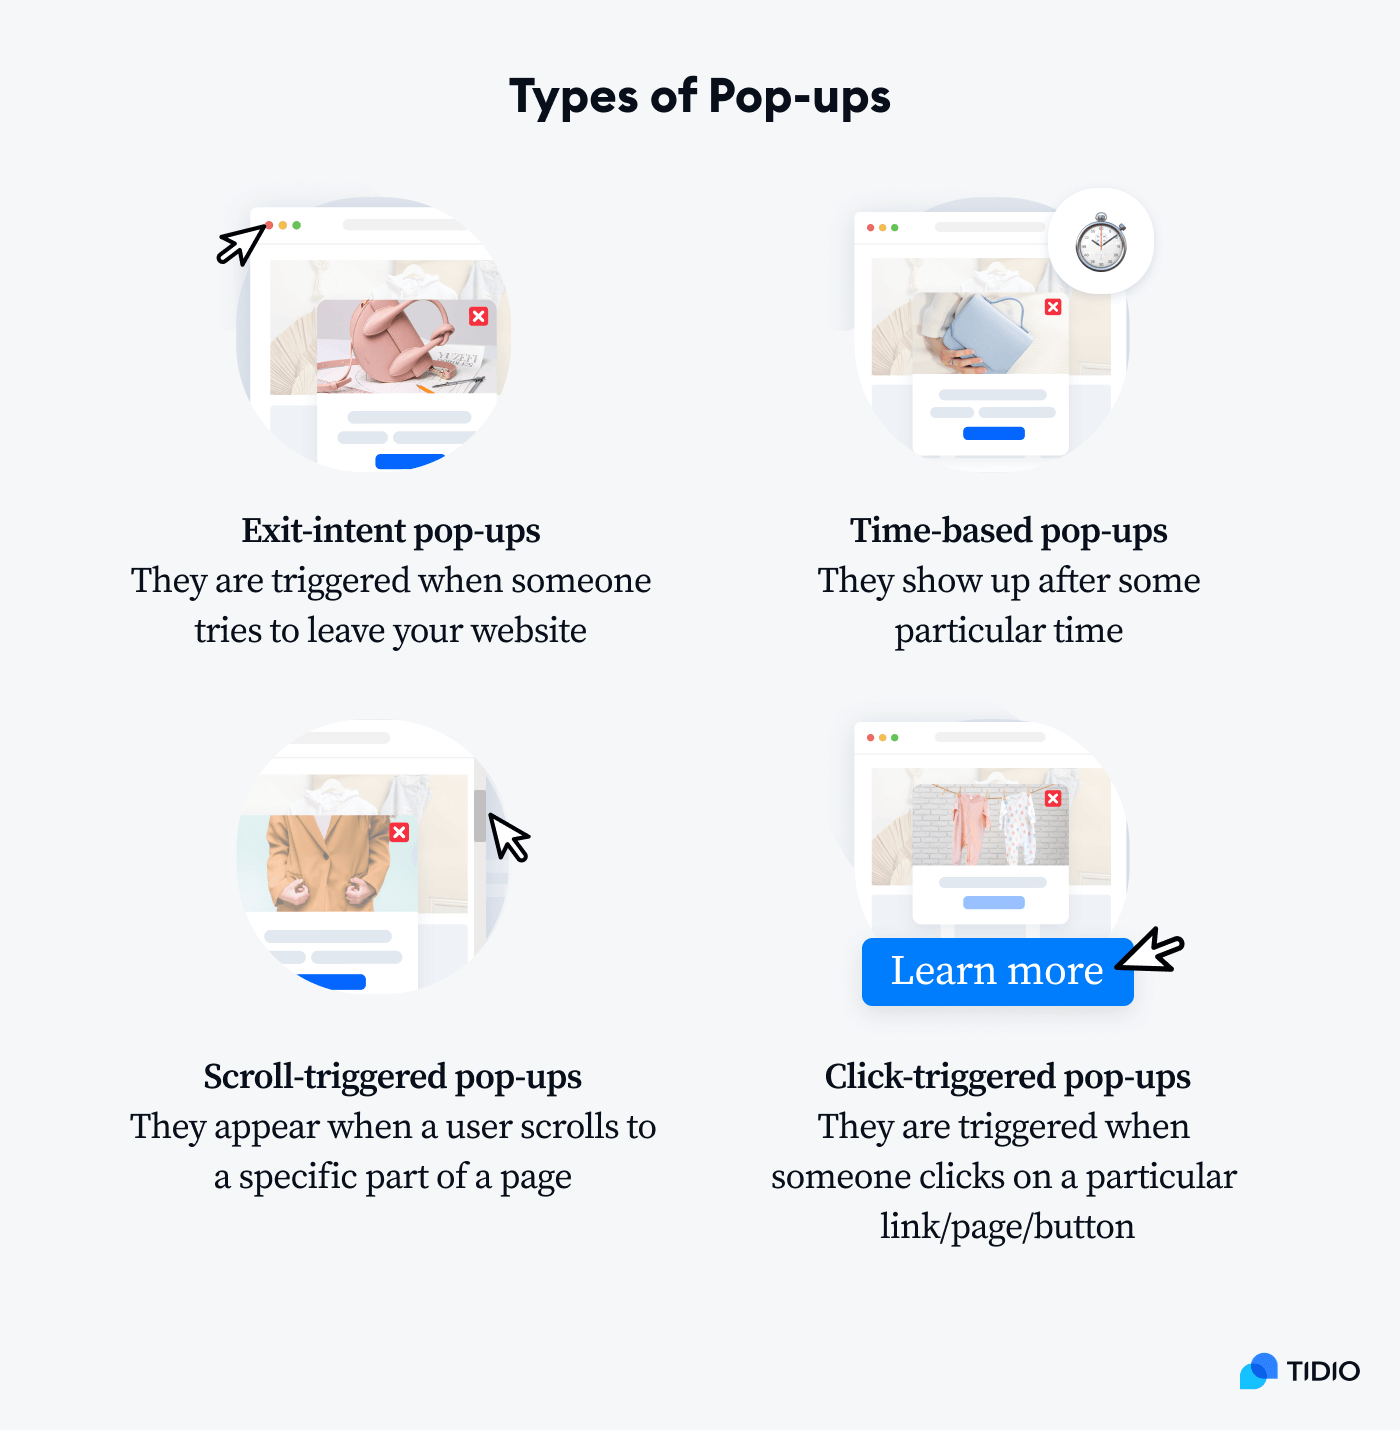 types of pop ups on image